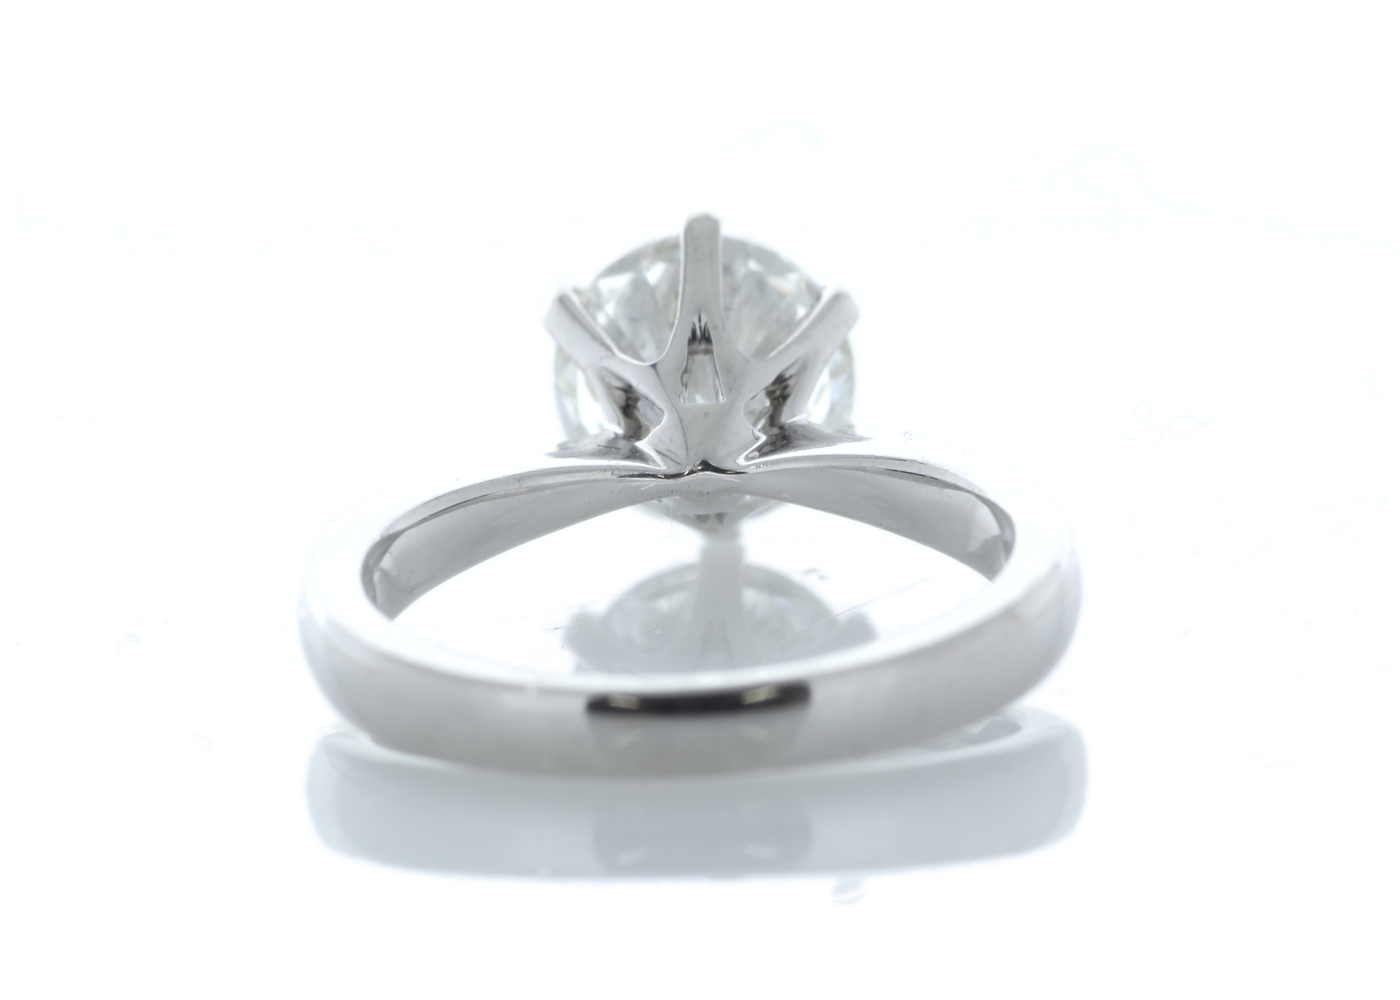 18ct White Gold Prong Set Diamond Ring 2.35 Carats - Image 3 of 5